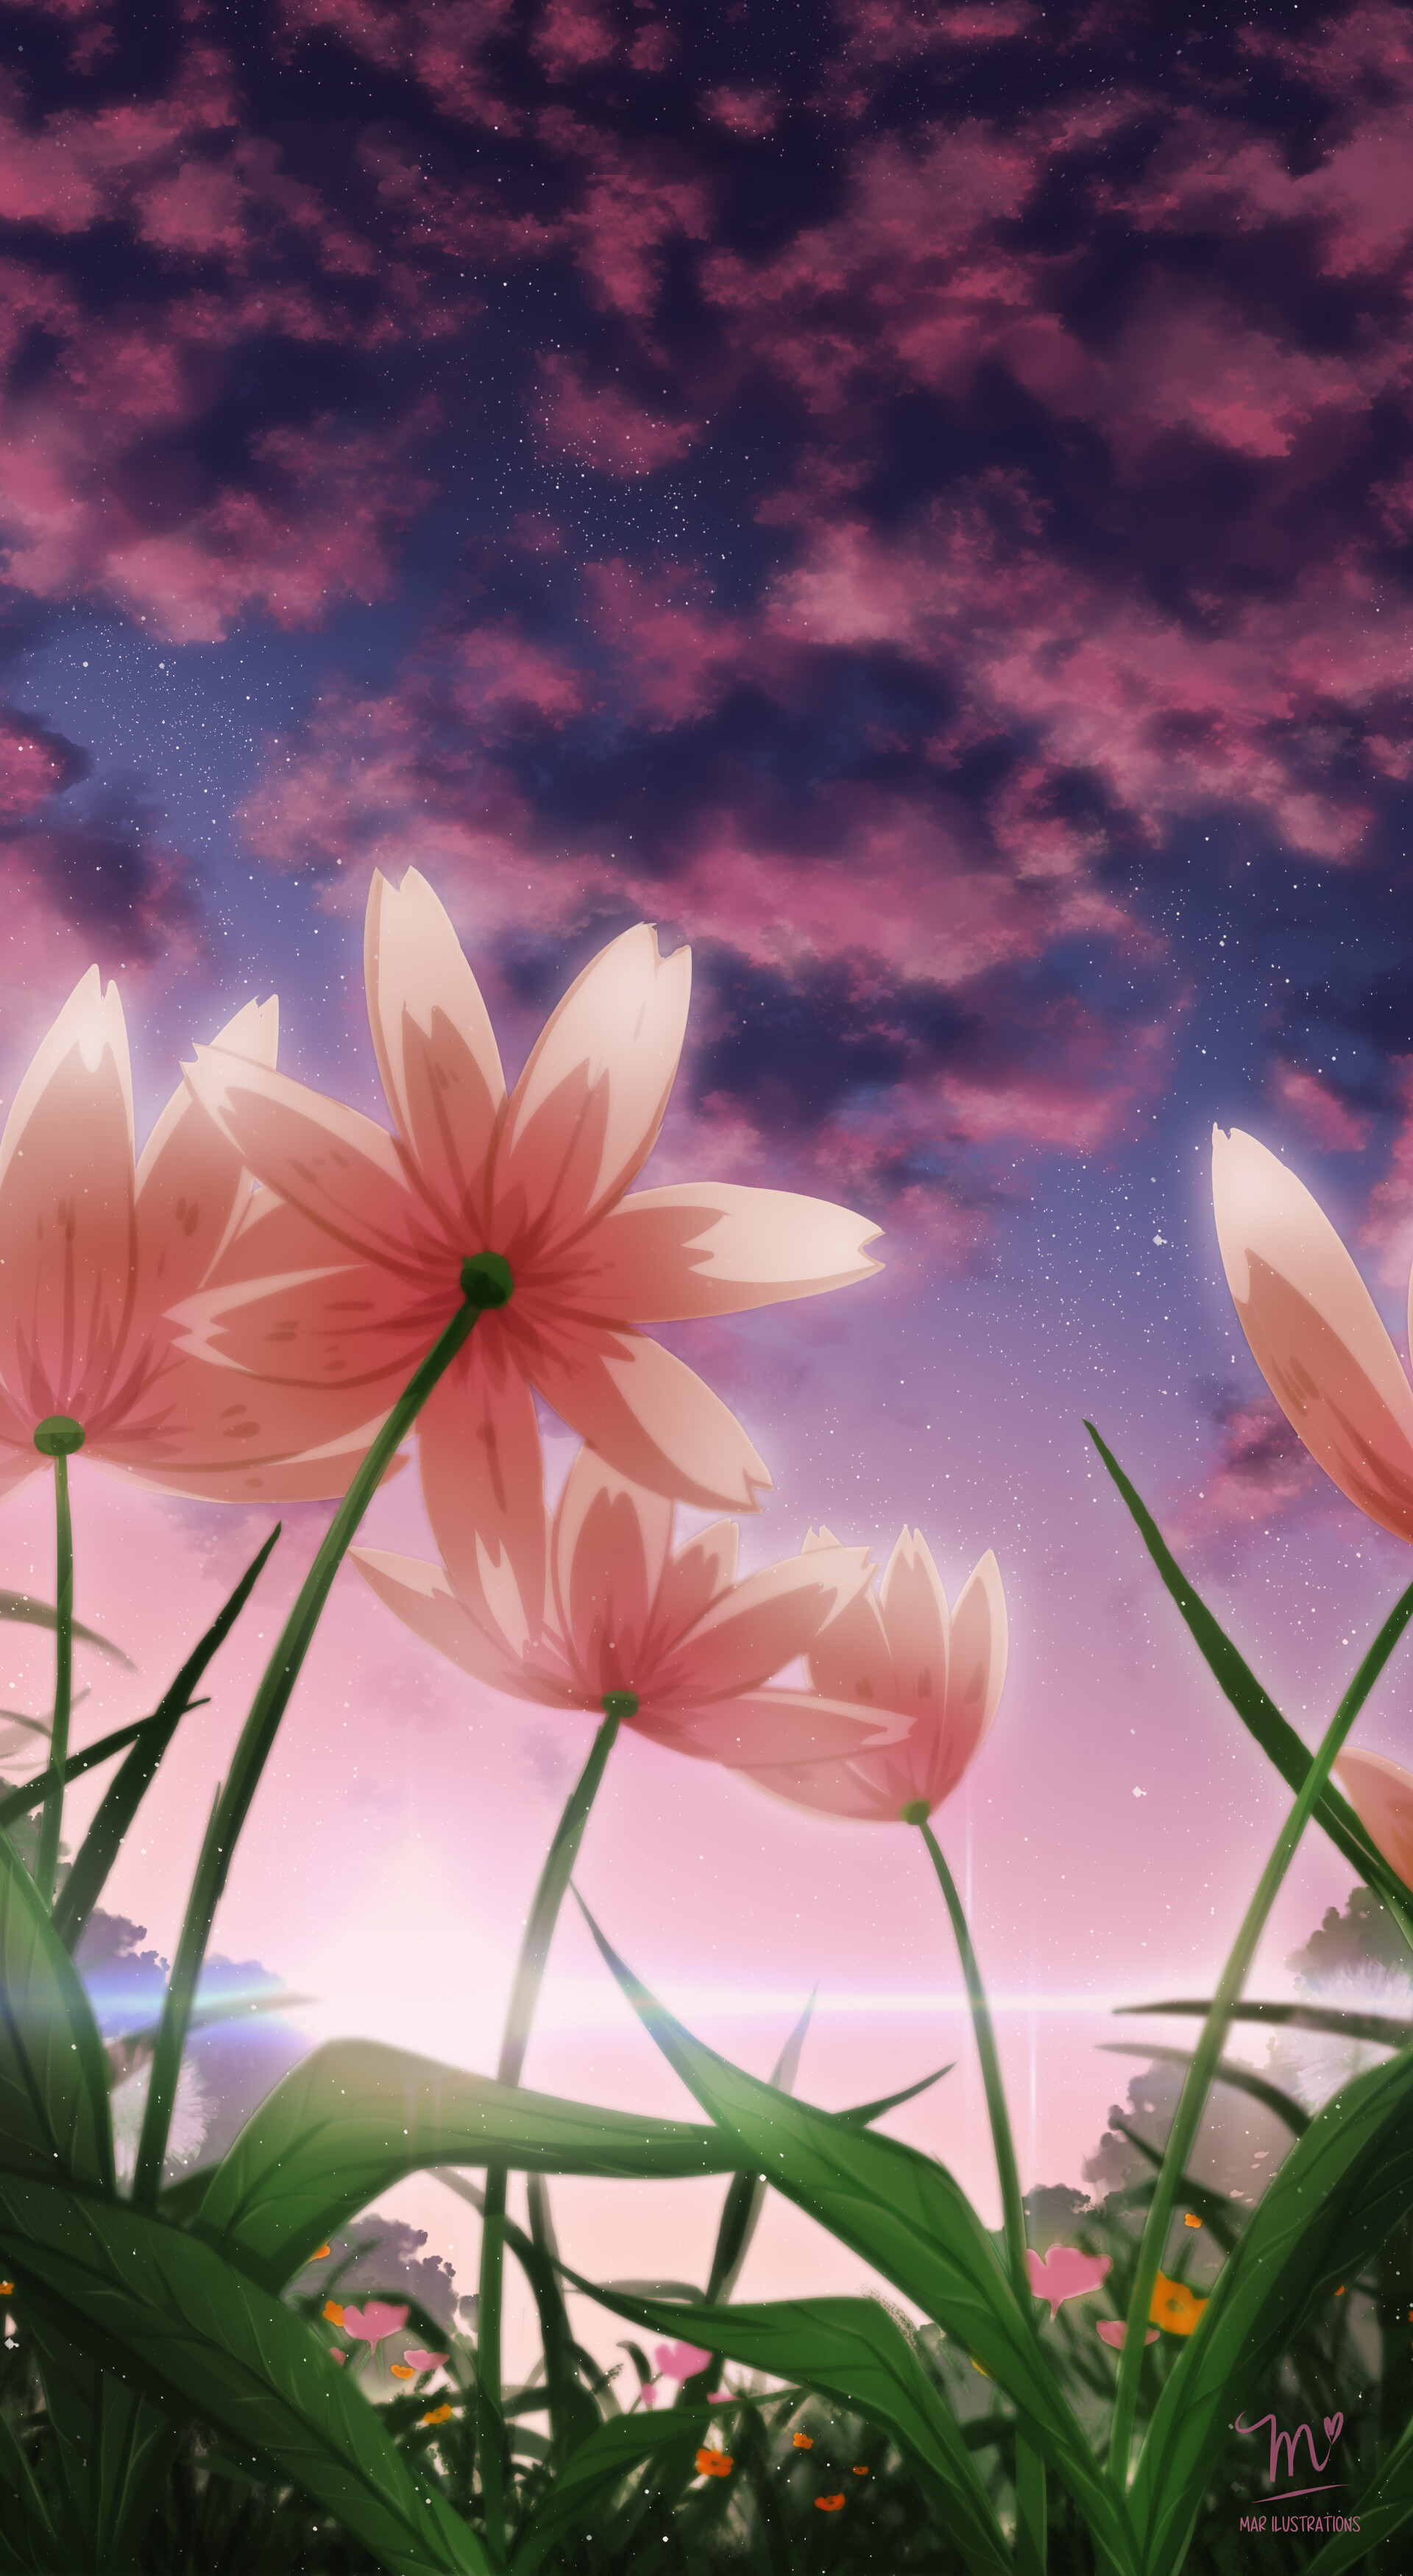 Zeegs - Sunrise | Anime scenery, Sky anime, Anime scenery wallpaper